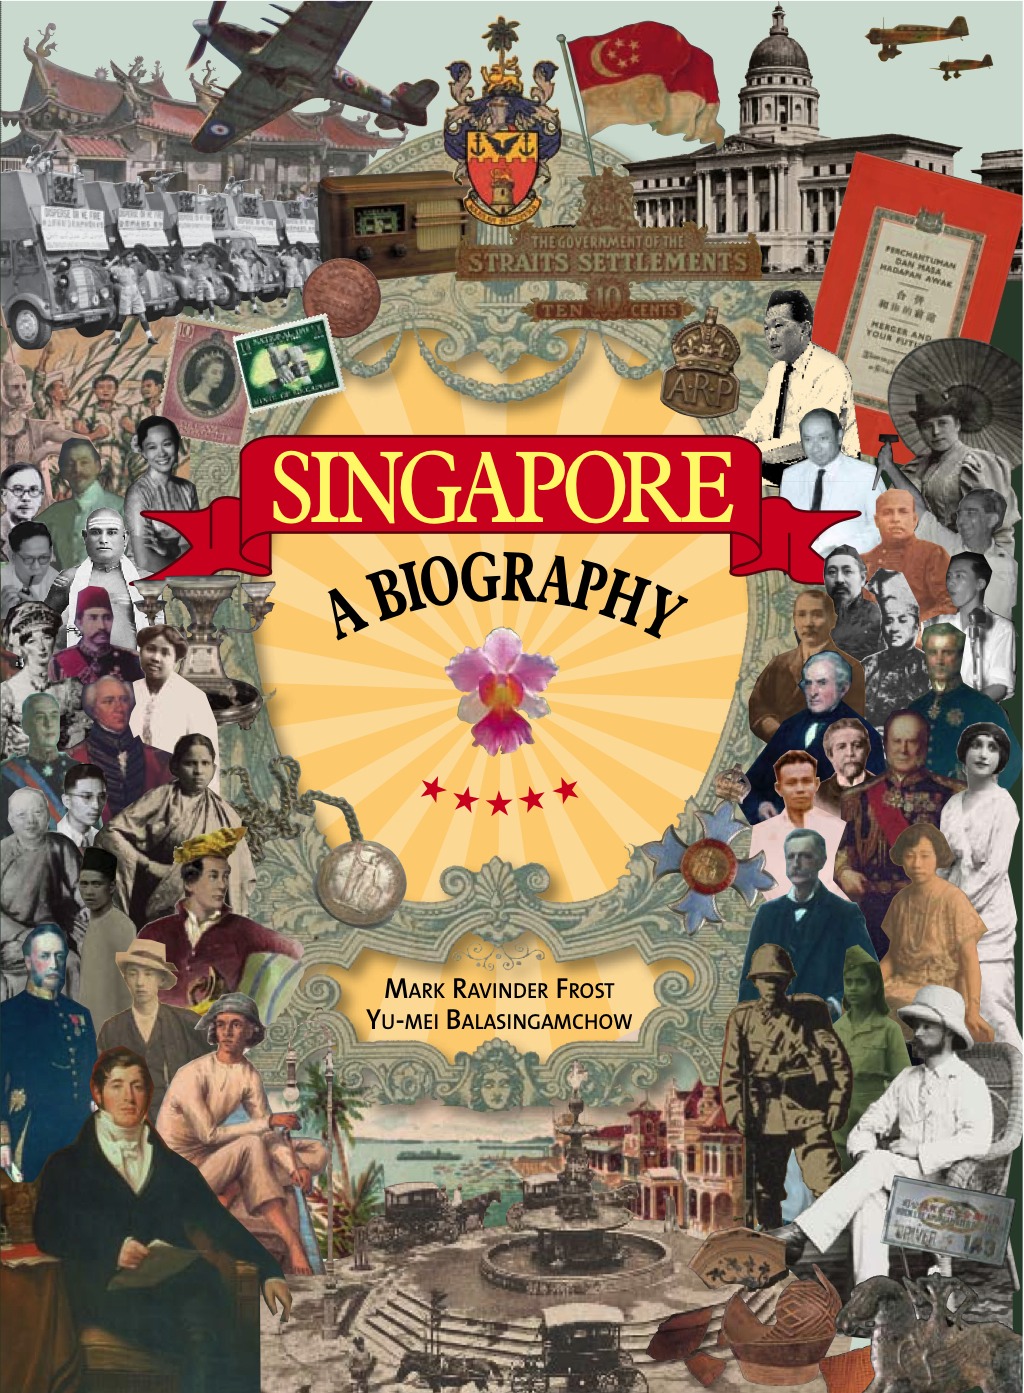 Singapore: A Biography book cover art